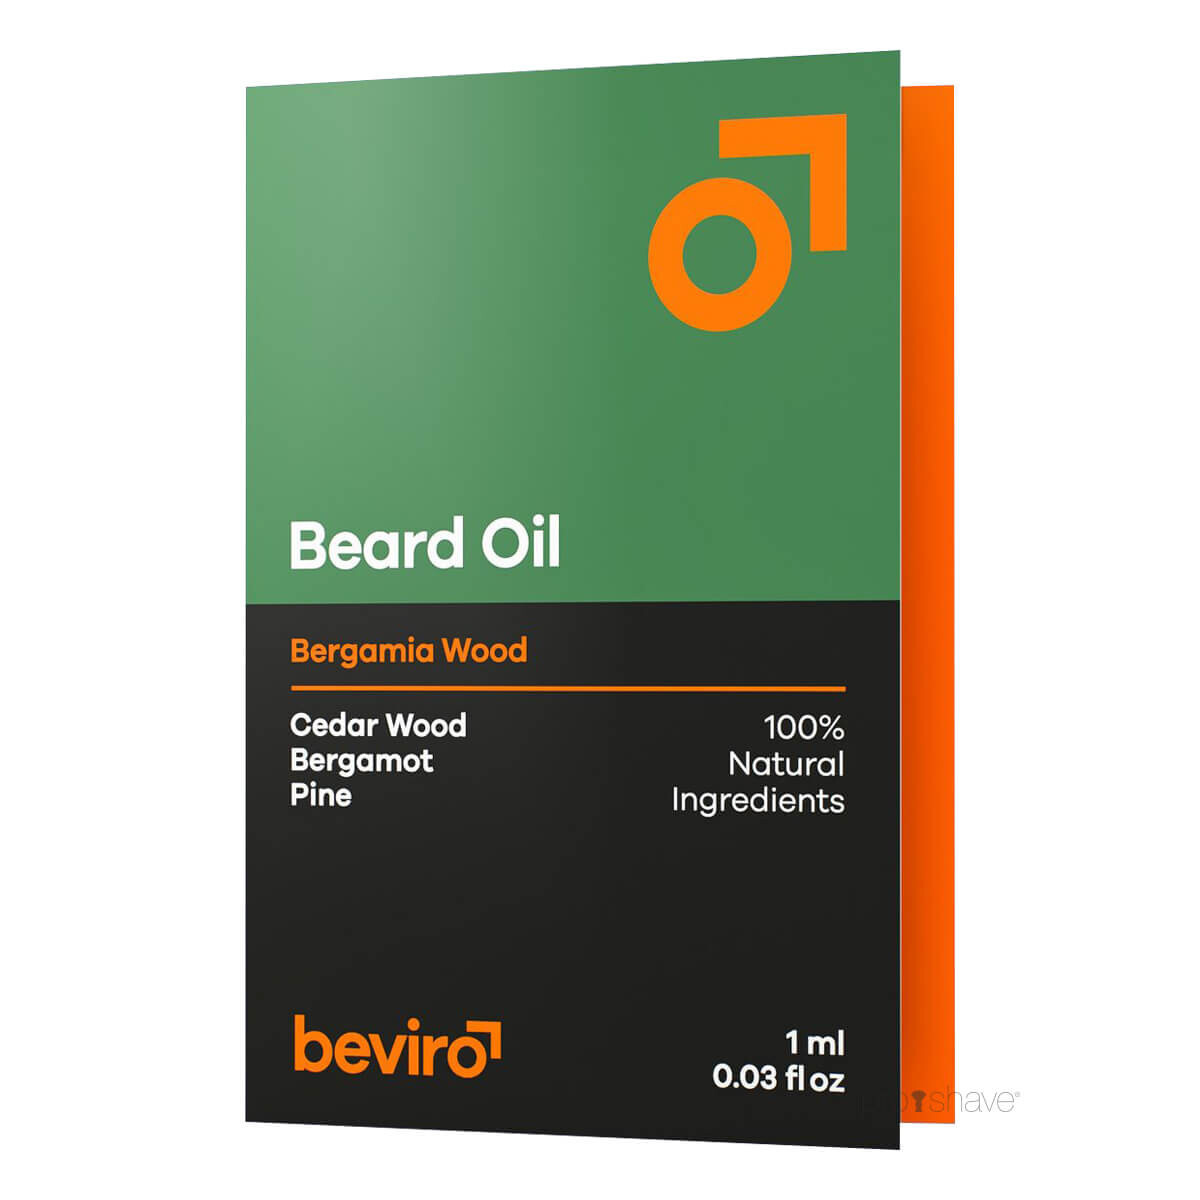 Billede af Beviro Beard Oil, Bergamia Wood, Sample, 1 ml.